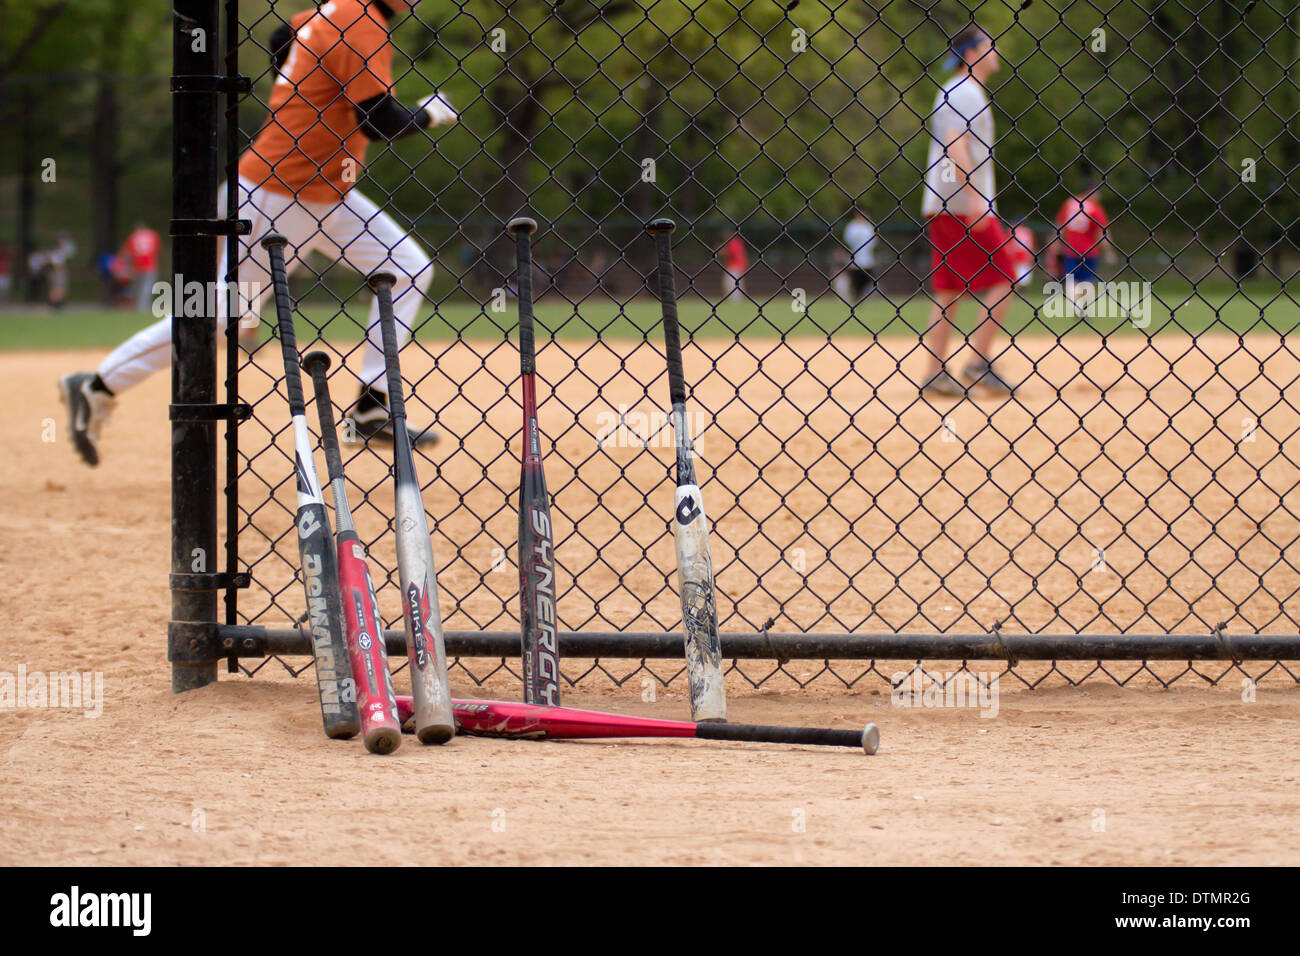 The baseball bats and players. Stock Photo